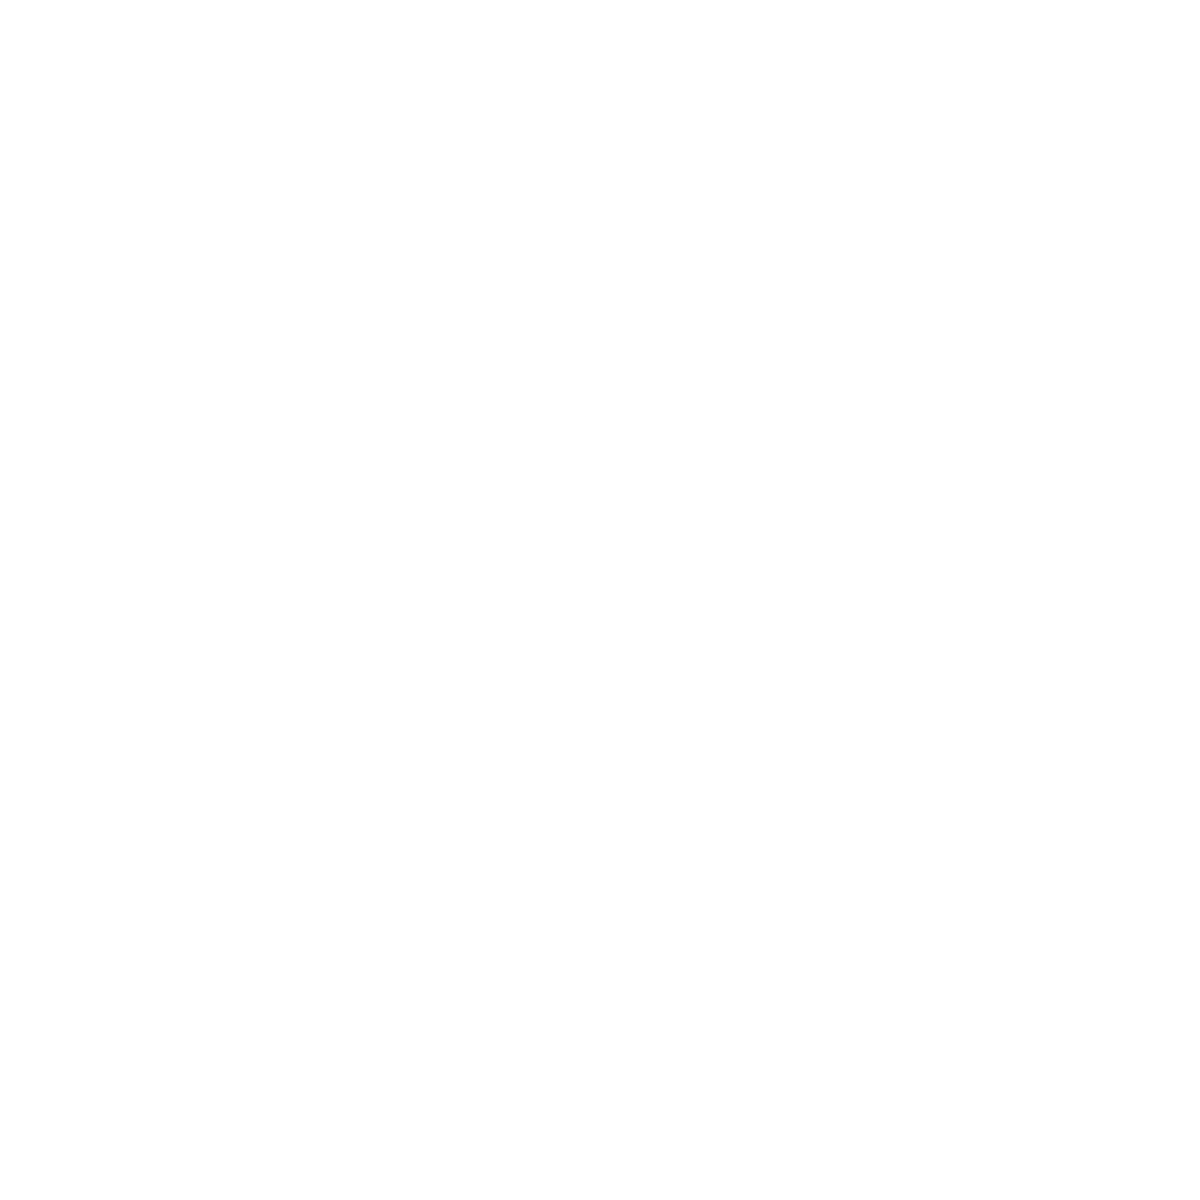 Newfound Shores